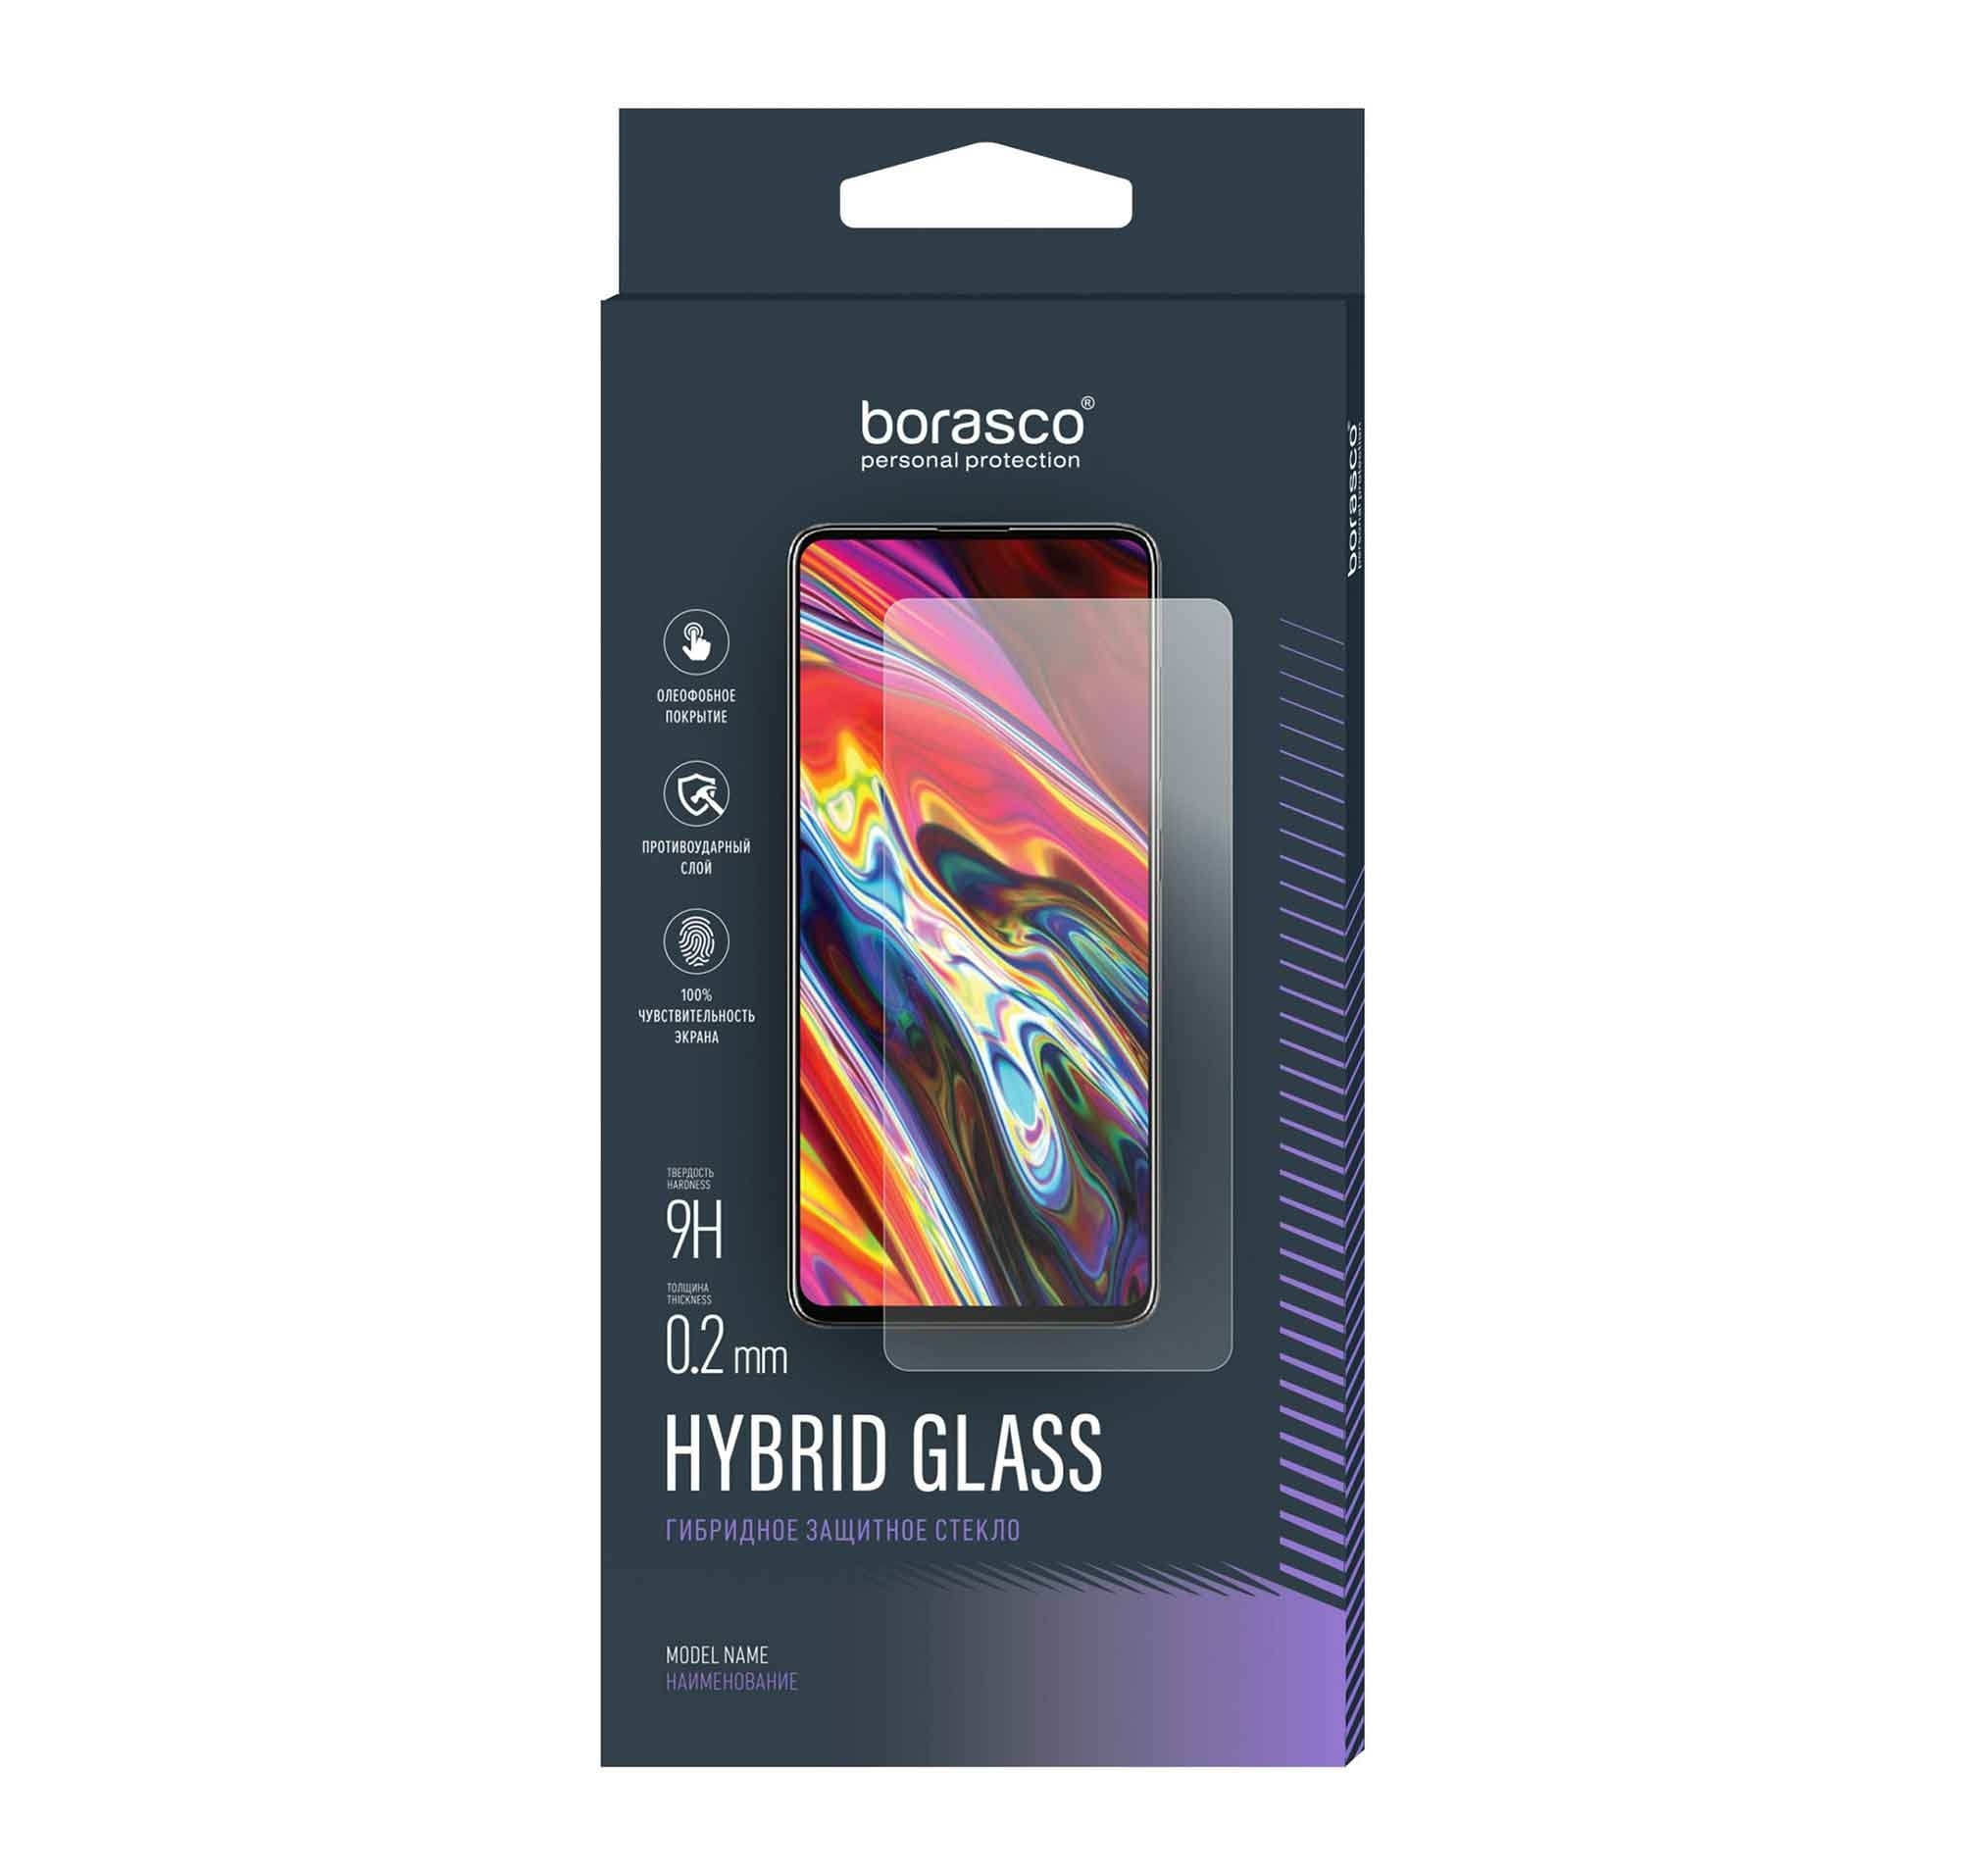 Стекло защитное BoraSCO Hybrid Glass для Oukitel F150 H2022 защитное стекло для смартфона krutoff f150 lite h2022